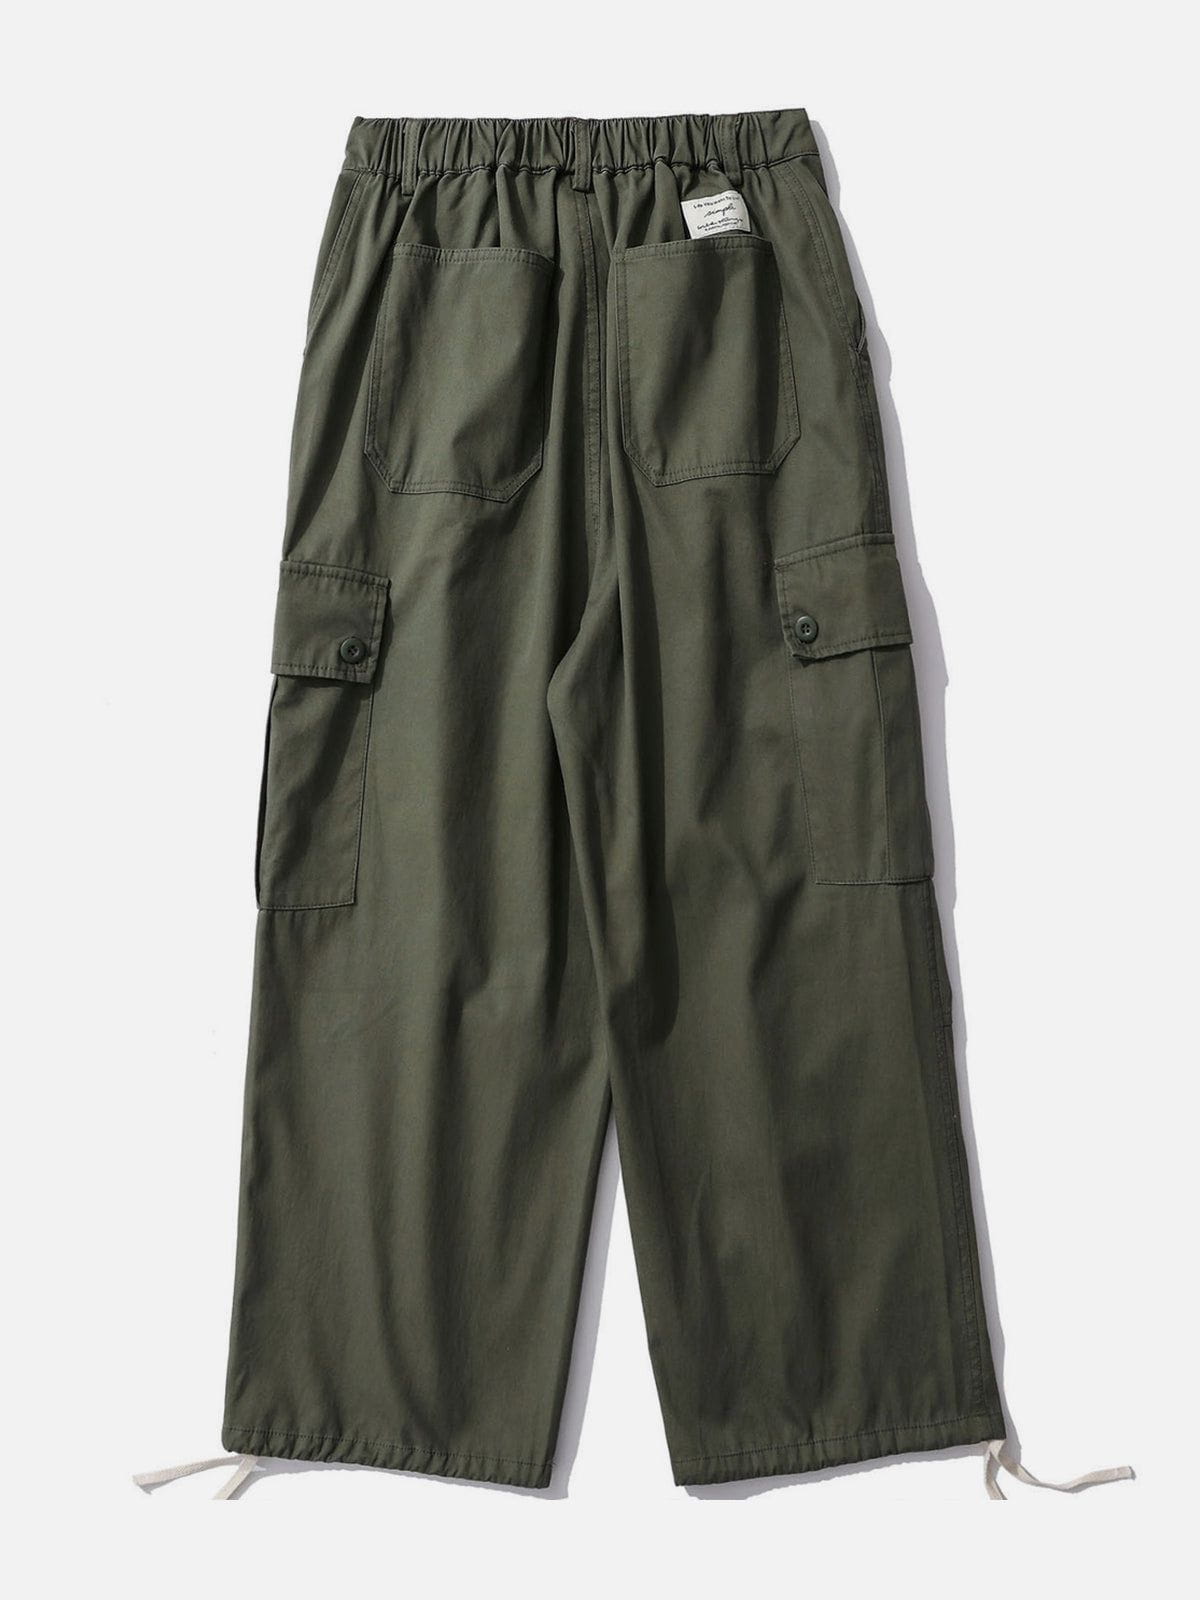 Majesda® - Multiple Pockets Cargo Pants outfit ideas streetwear fashion